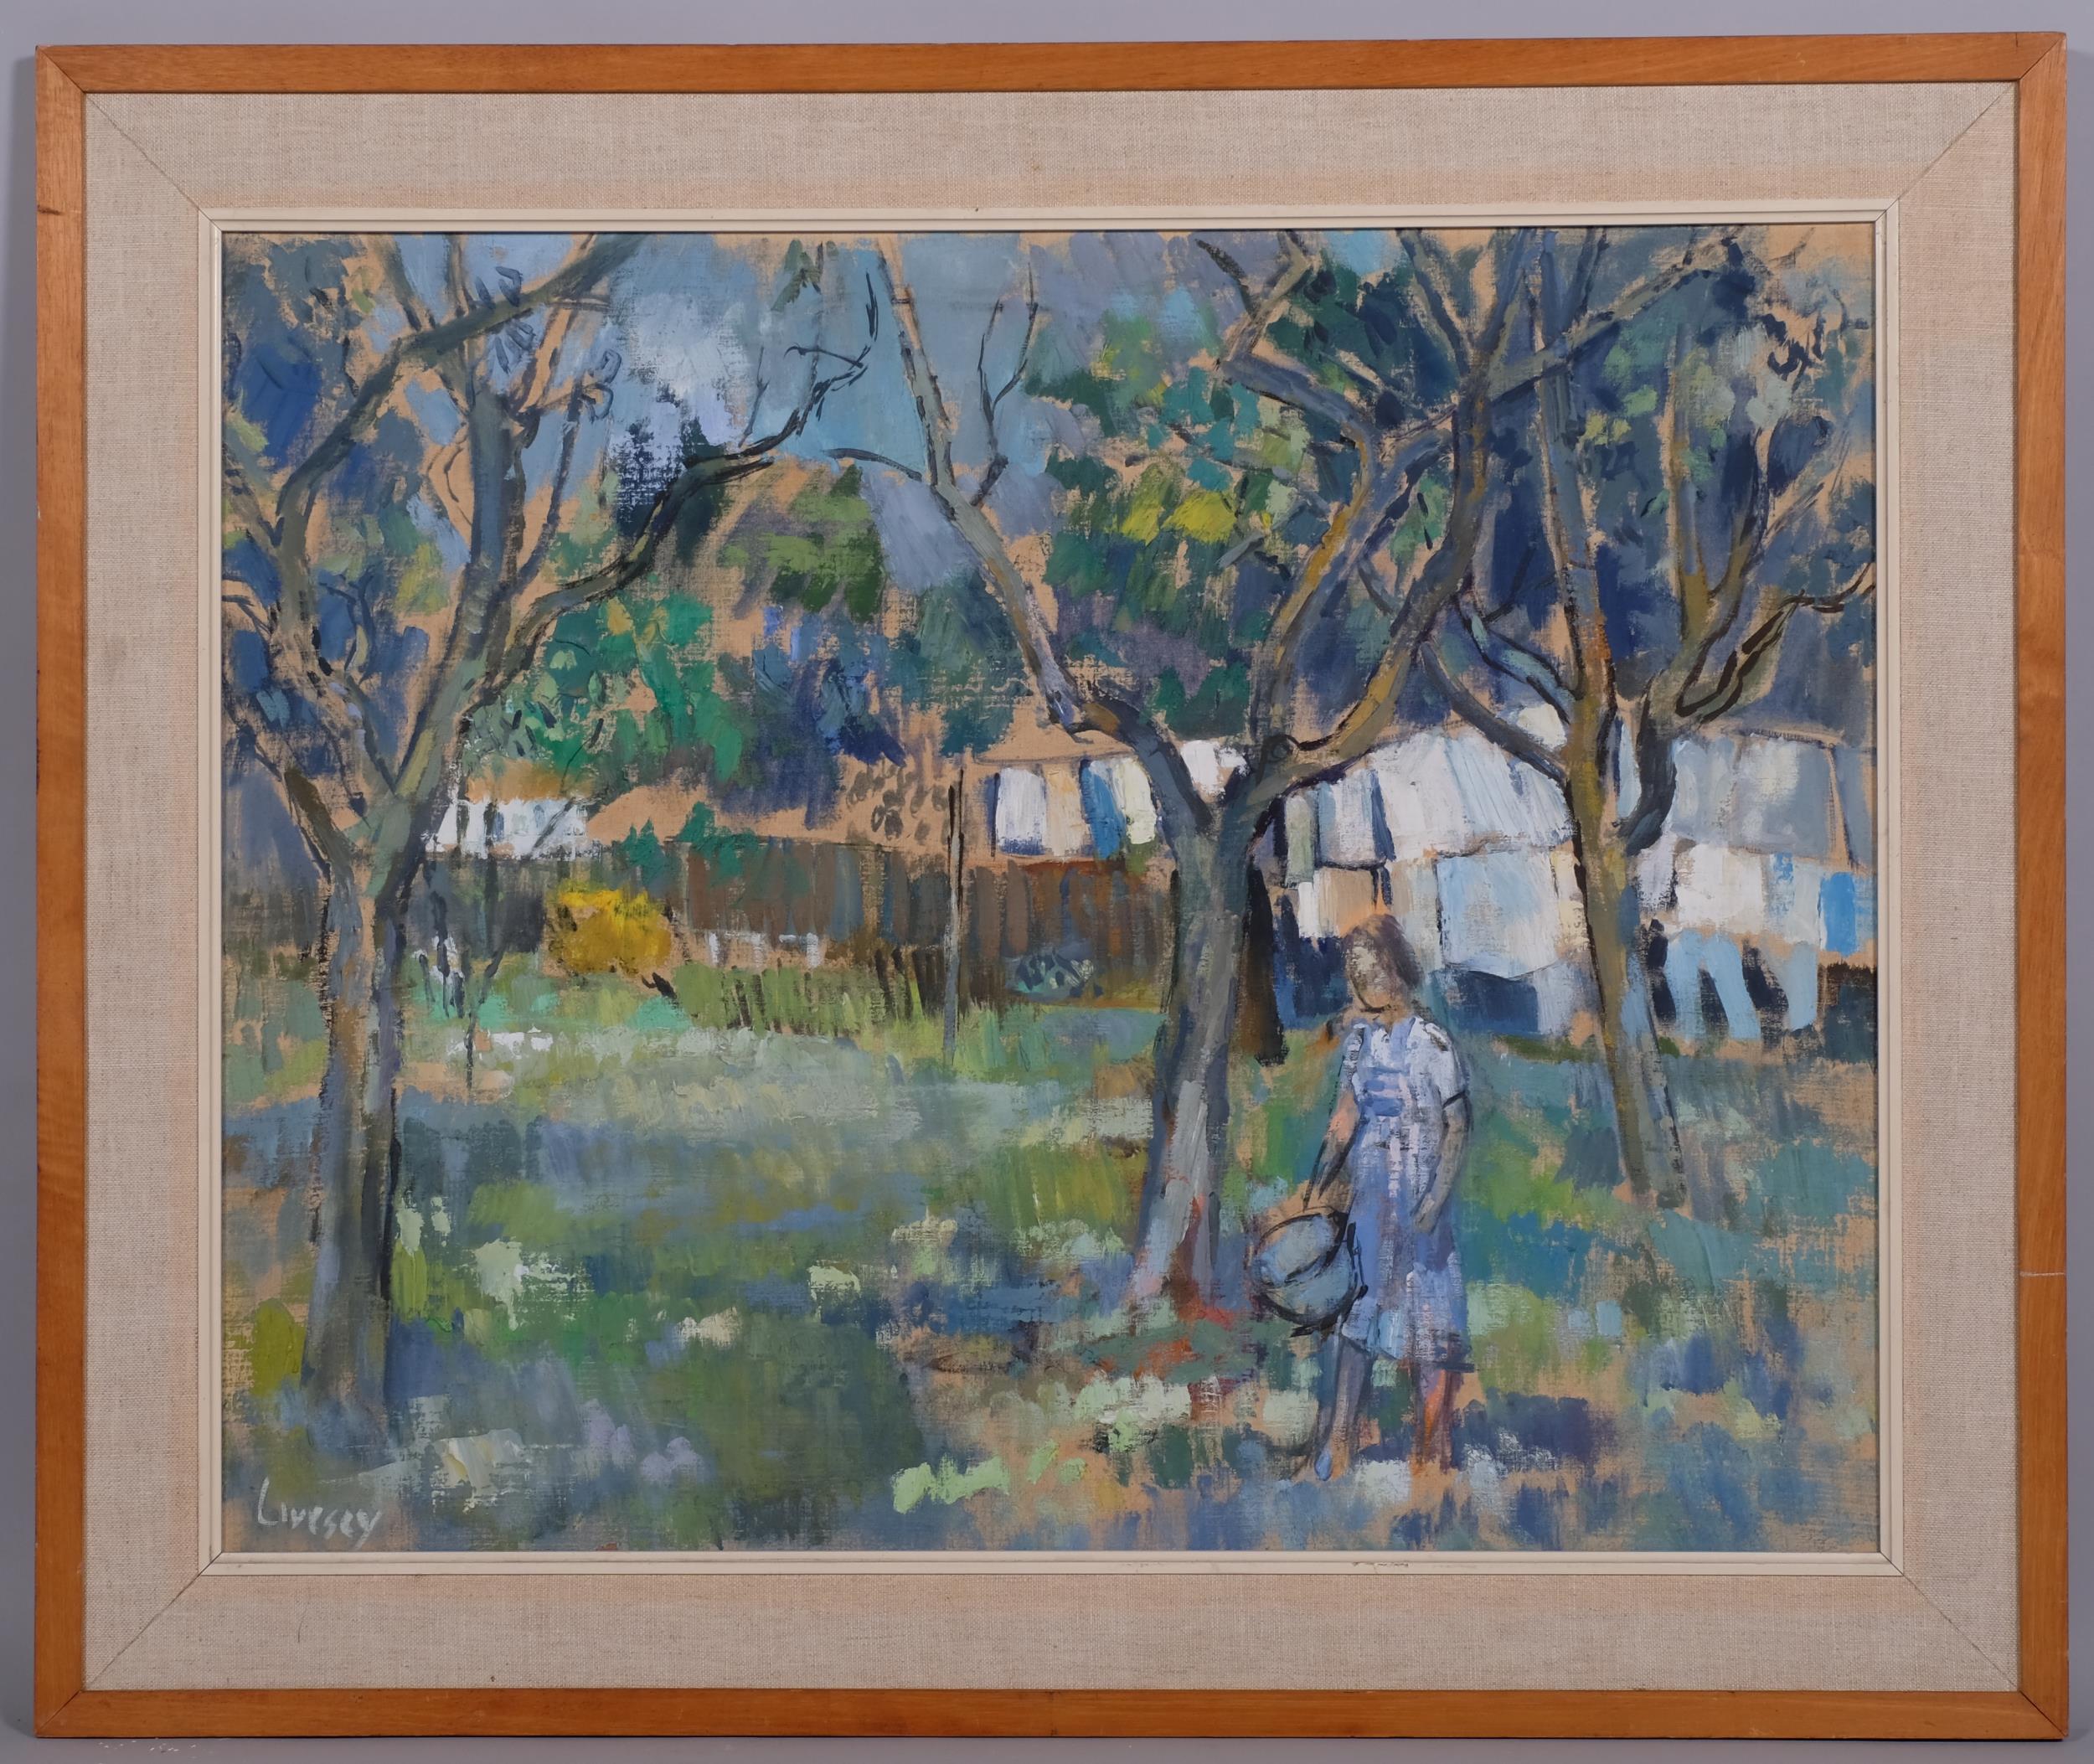 John Livesey (1926 - 1990), girl in an orchard, oil on board, signed, 61cm x 77cm, framed Good